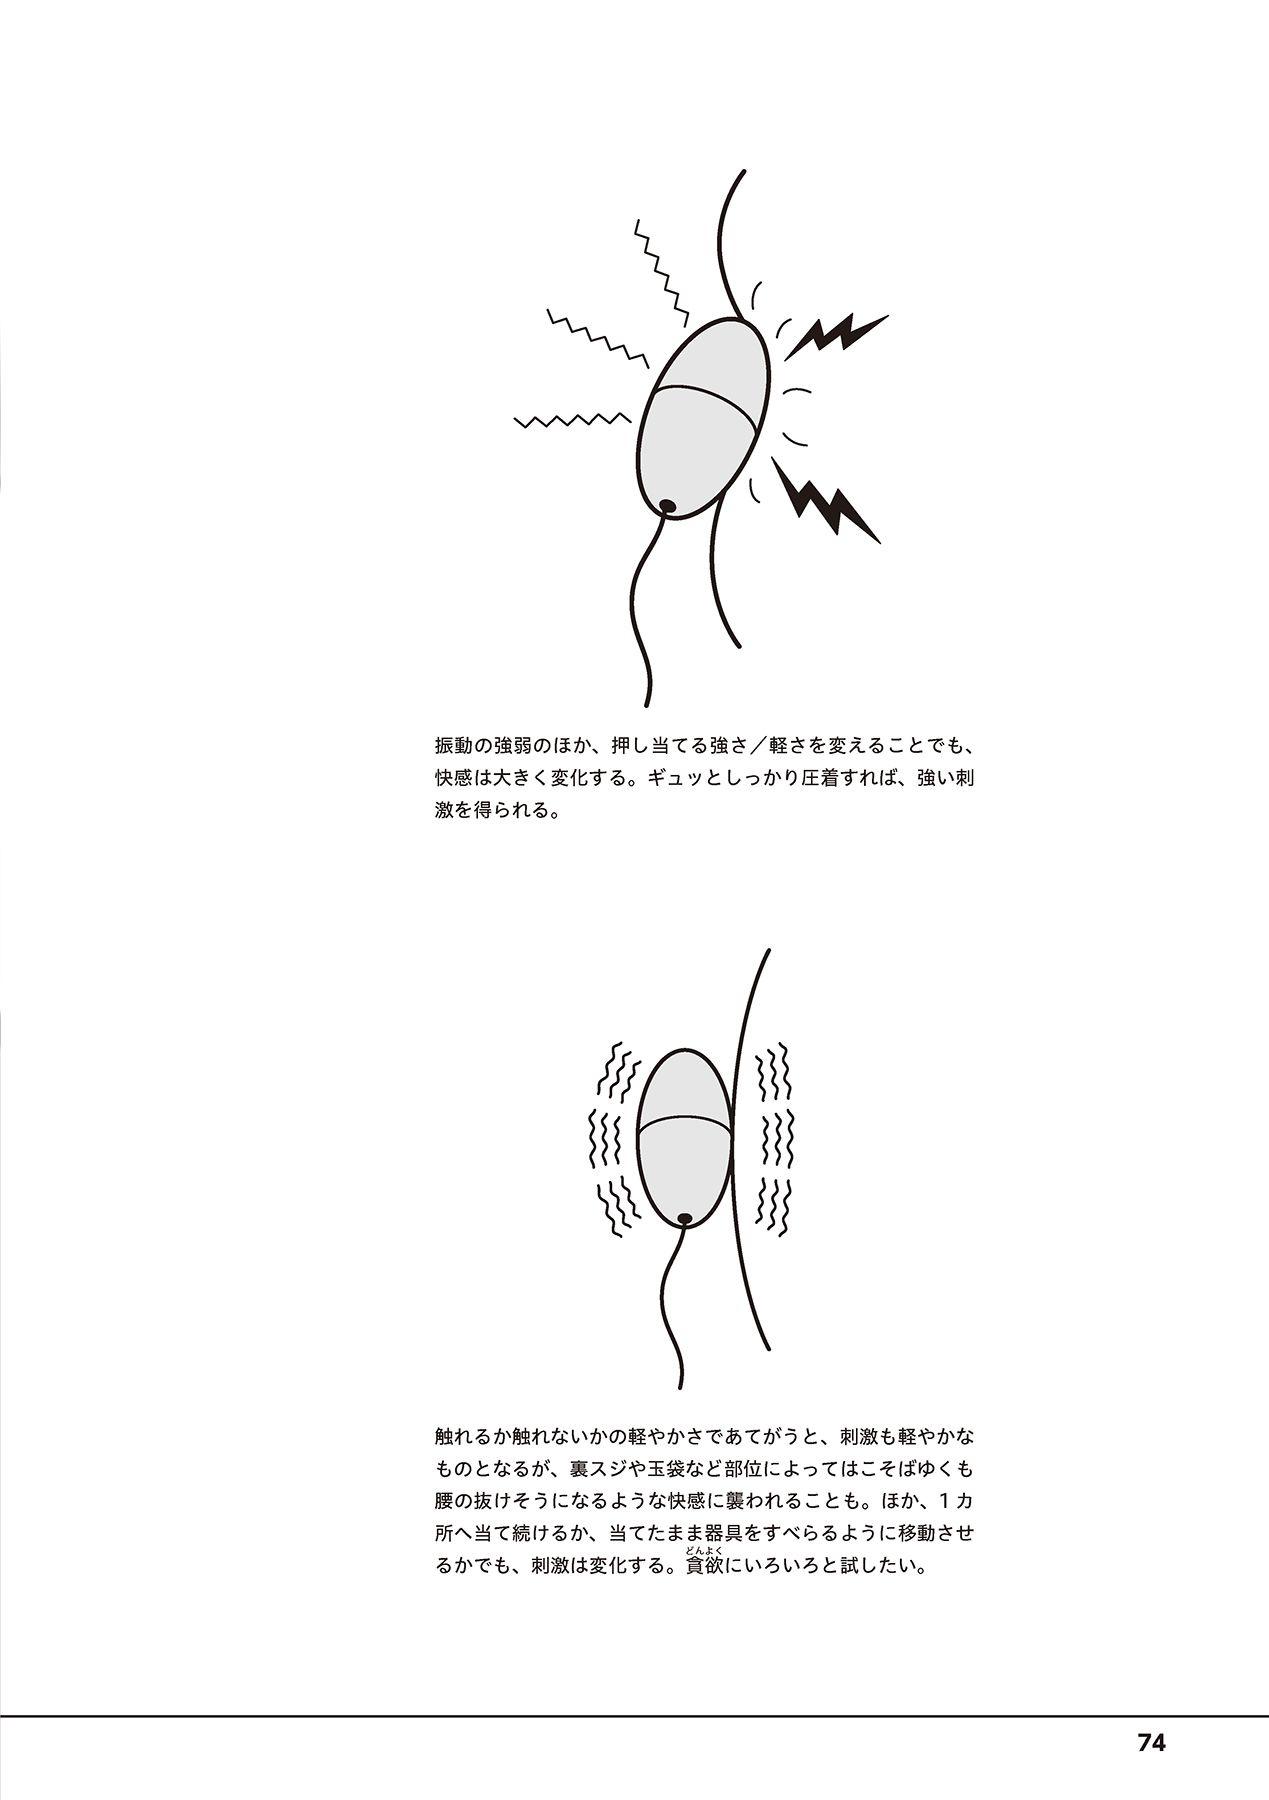 Otoko no Jii Onanie Kanzen Manual Illustration Han...... Onanie Play 75